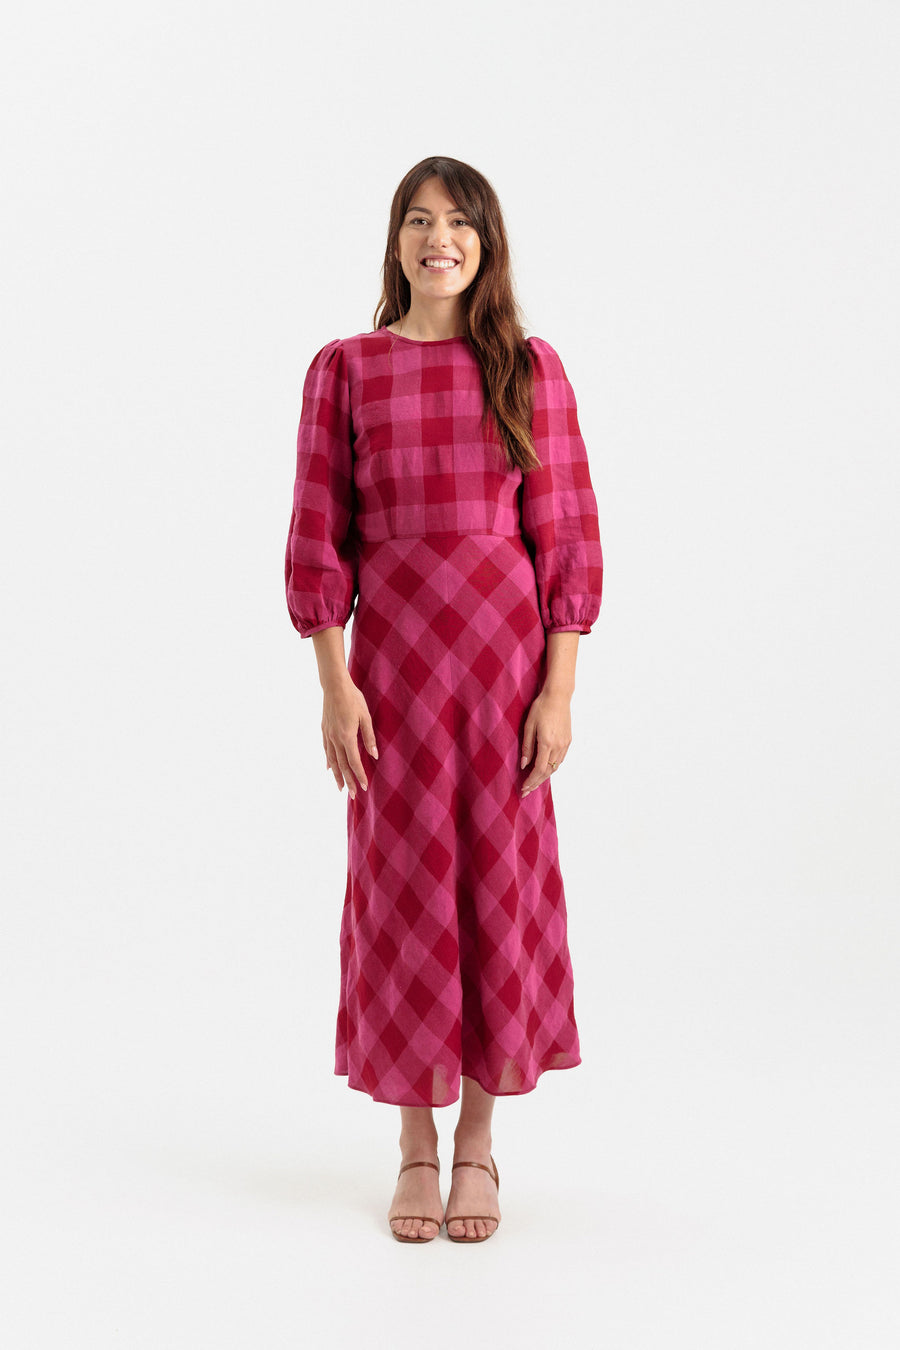 Lulee Dress/Skirt pattern- Papercuts